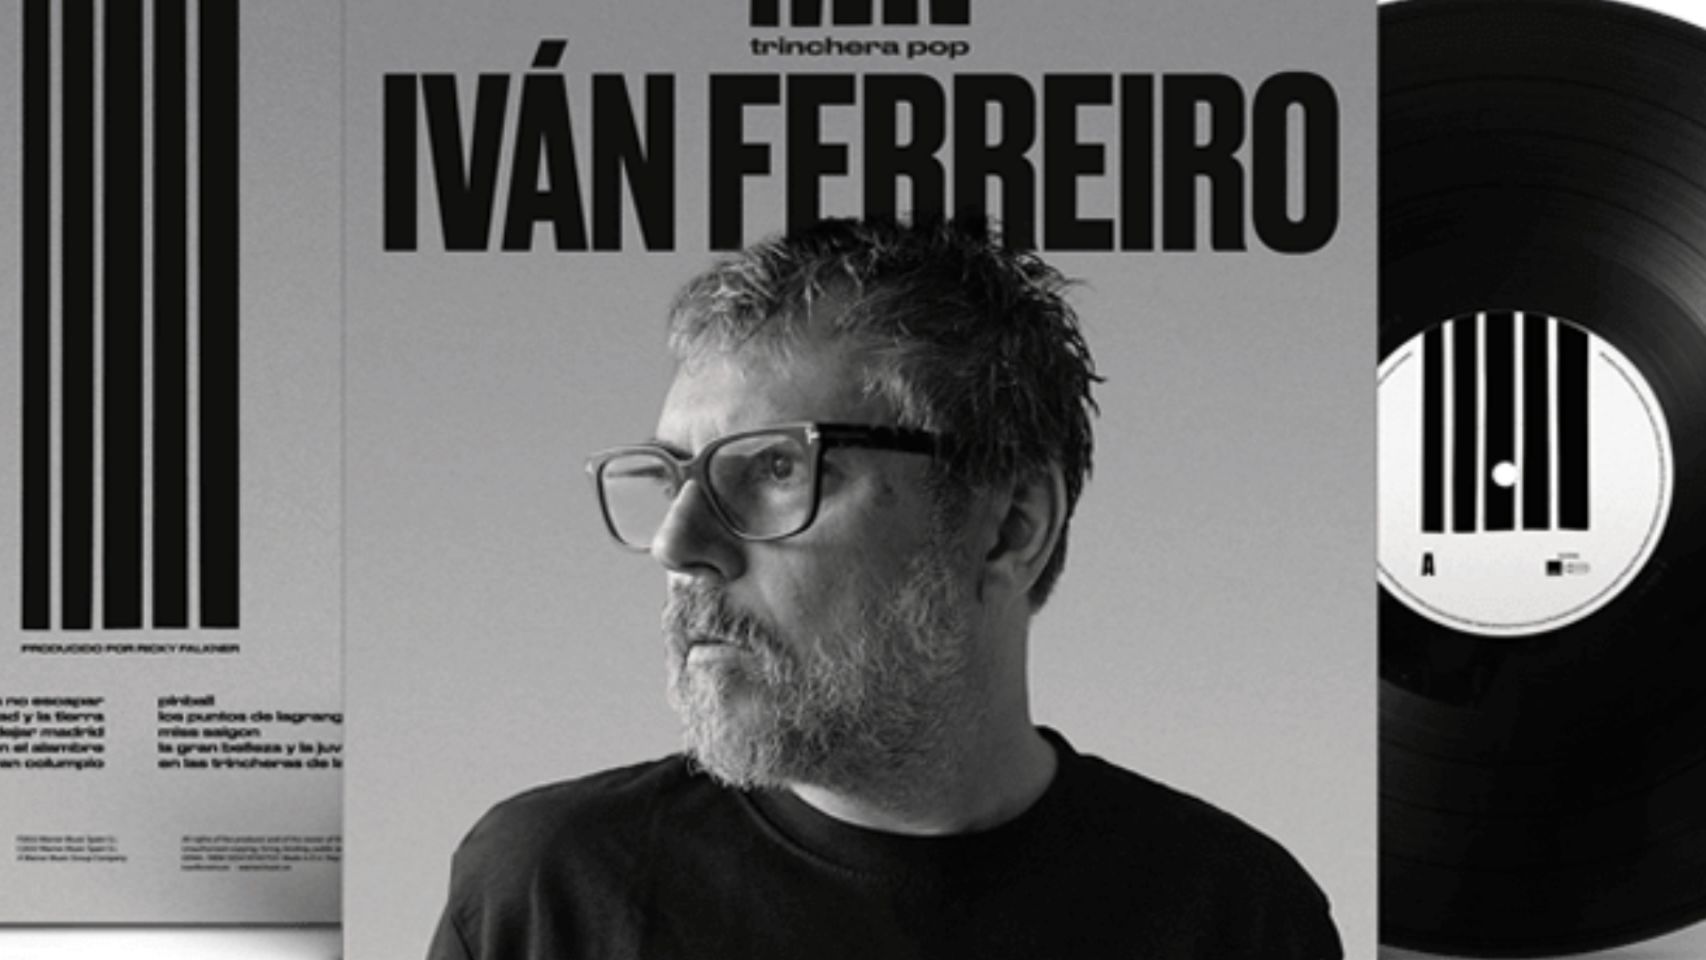 Nuevo disco de Iván Ferreiro, 'Trinchera pop'. 